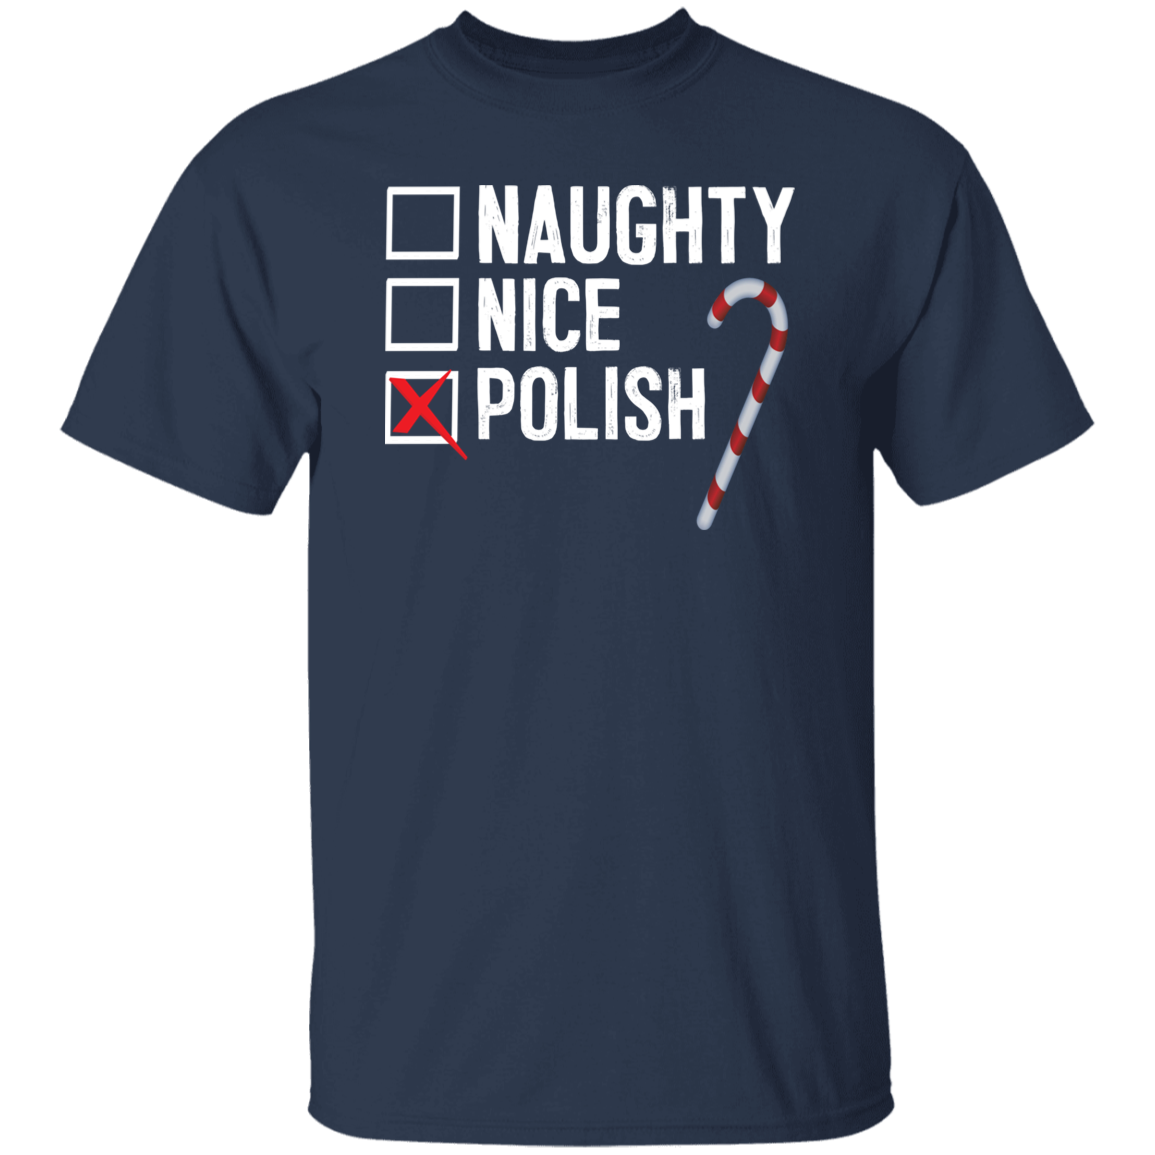 Polish Naughty Or Nice List Apparel CustomCat G500 5.3 oz. T-Shirt Navy S